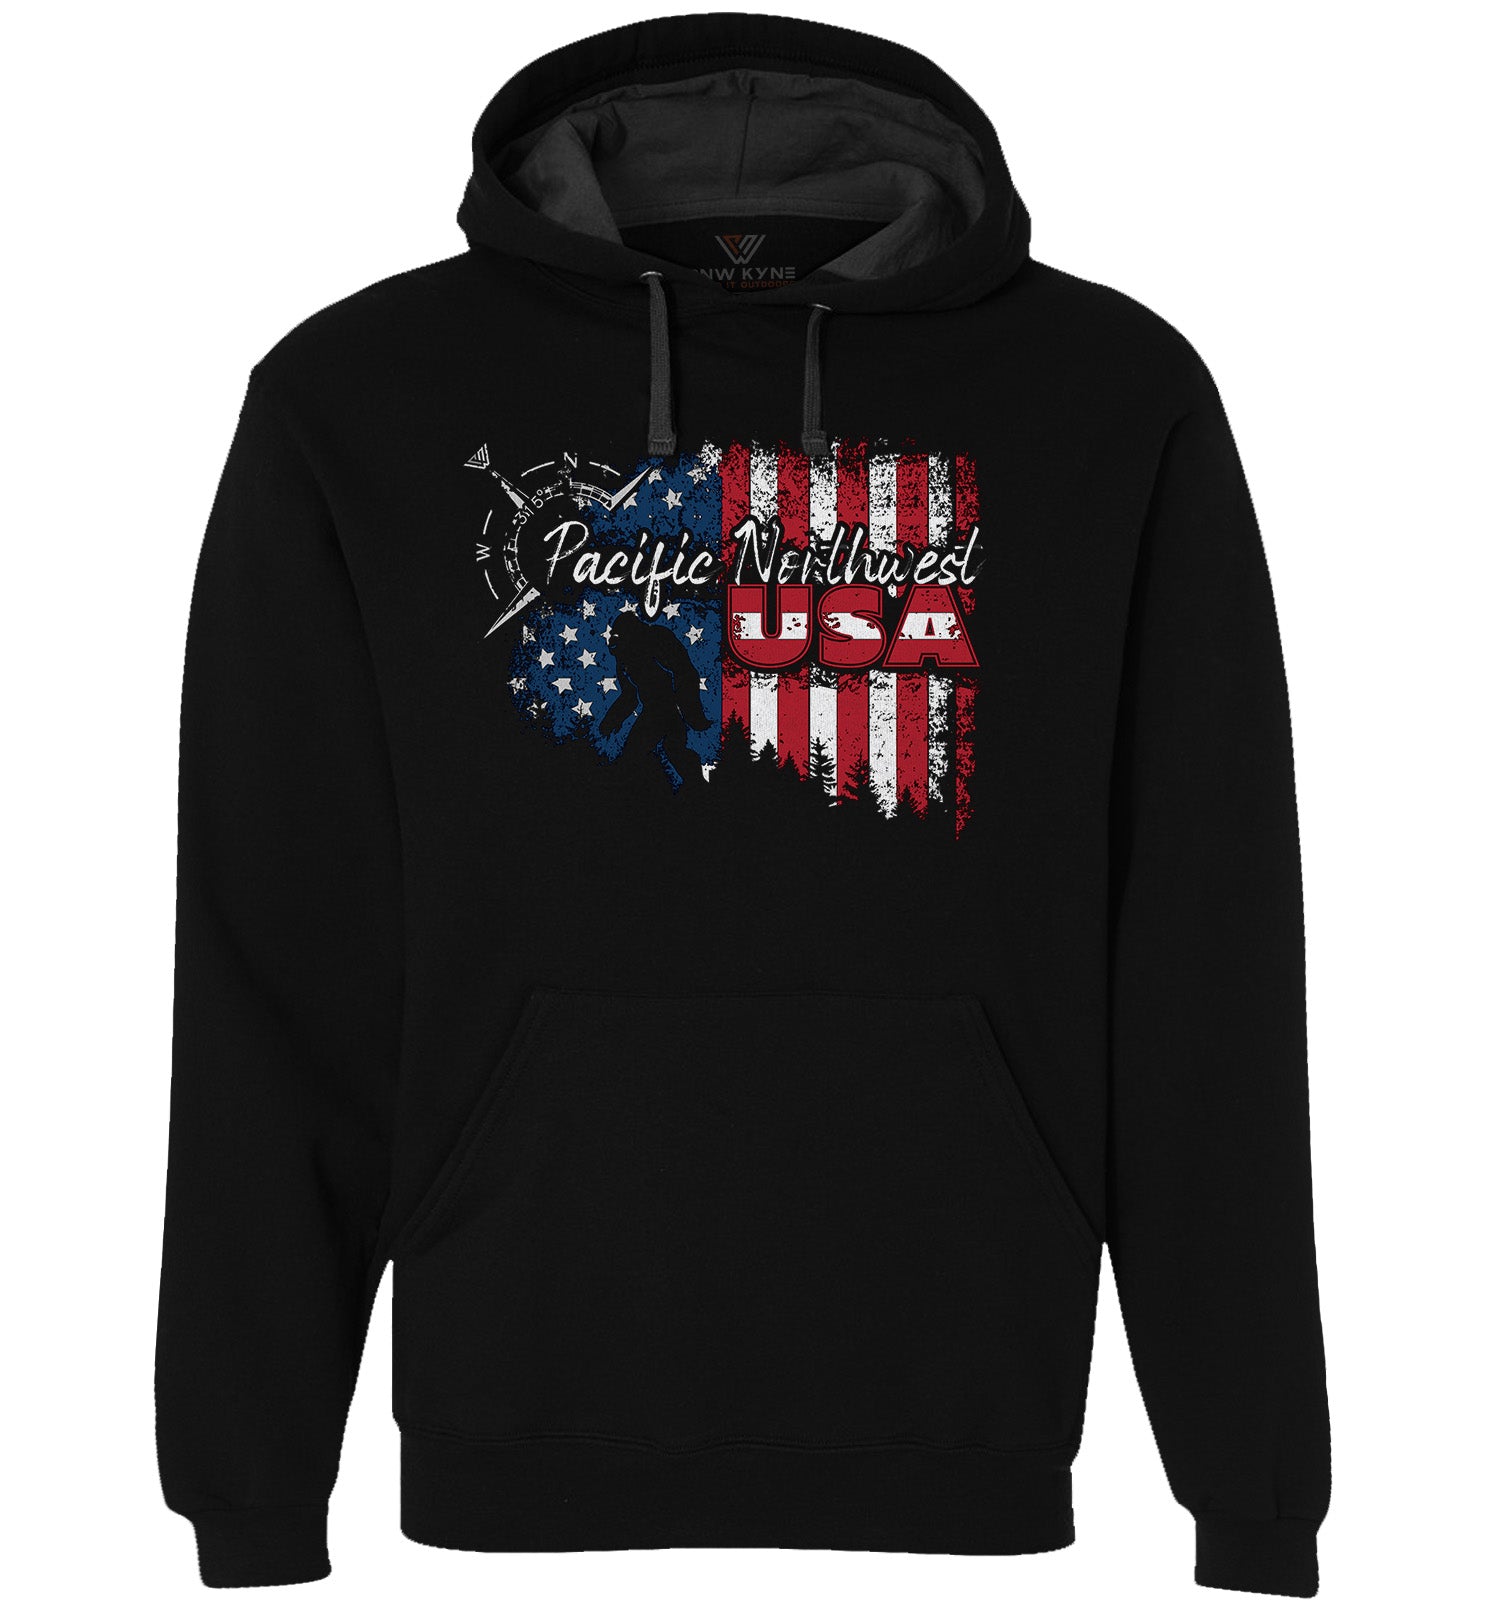 Bigfoot Sweatshirt - Pacific Northwest USA - Pullover Hoodie - Front - Black